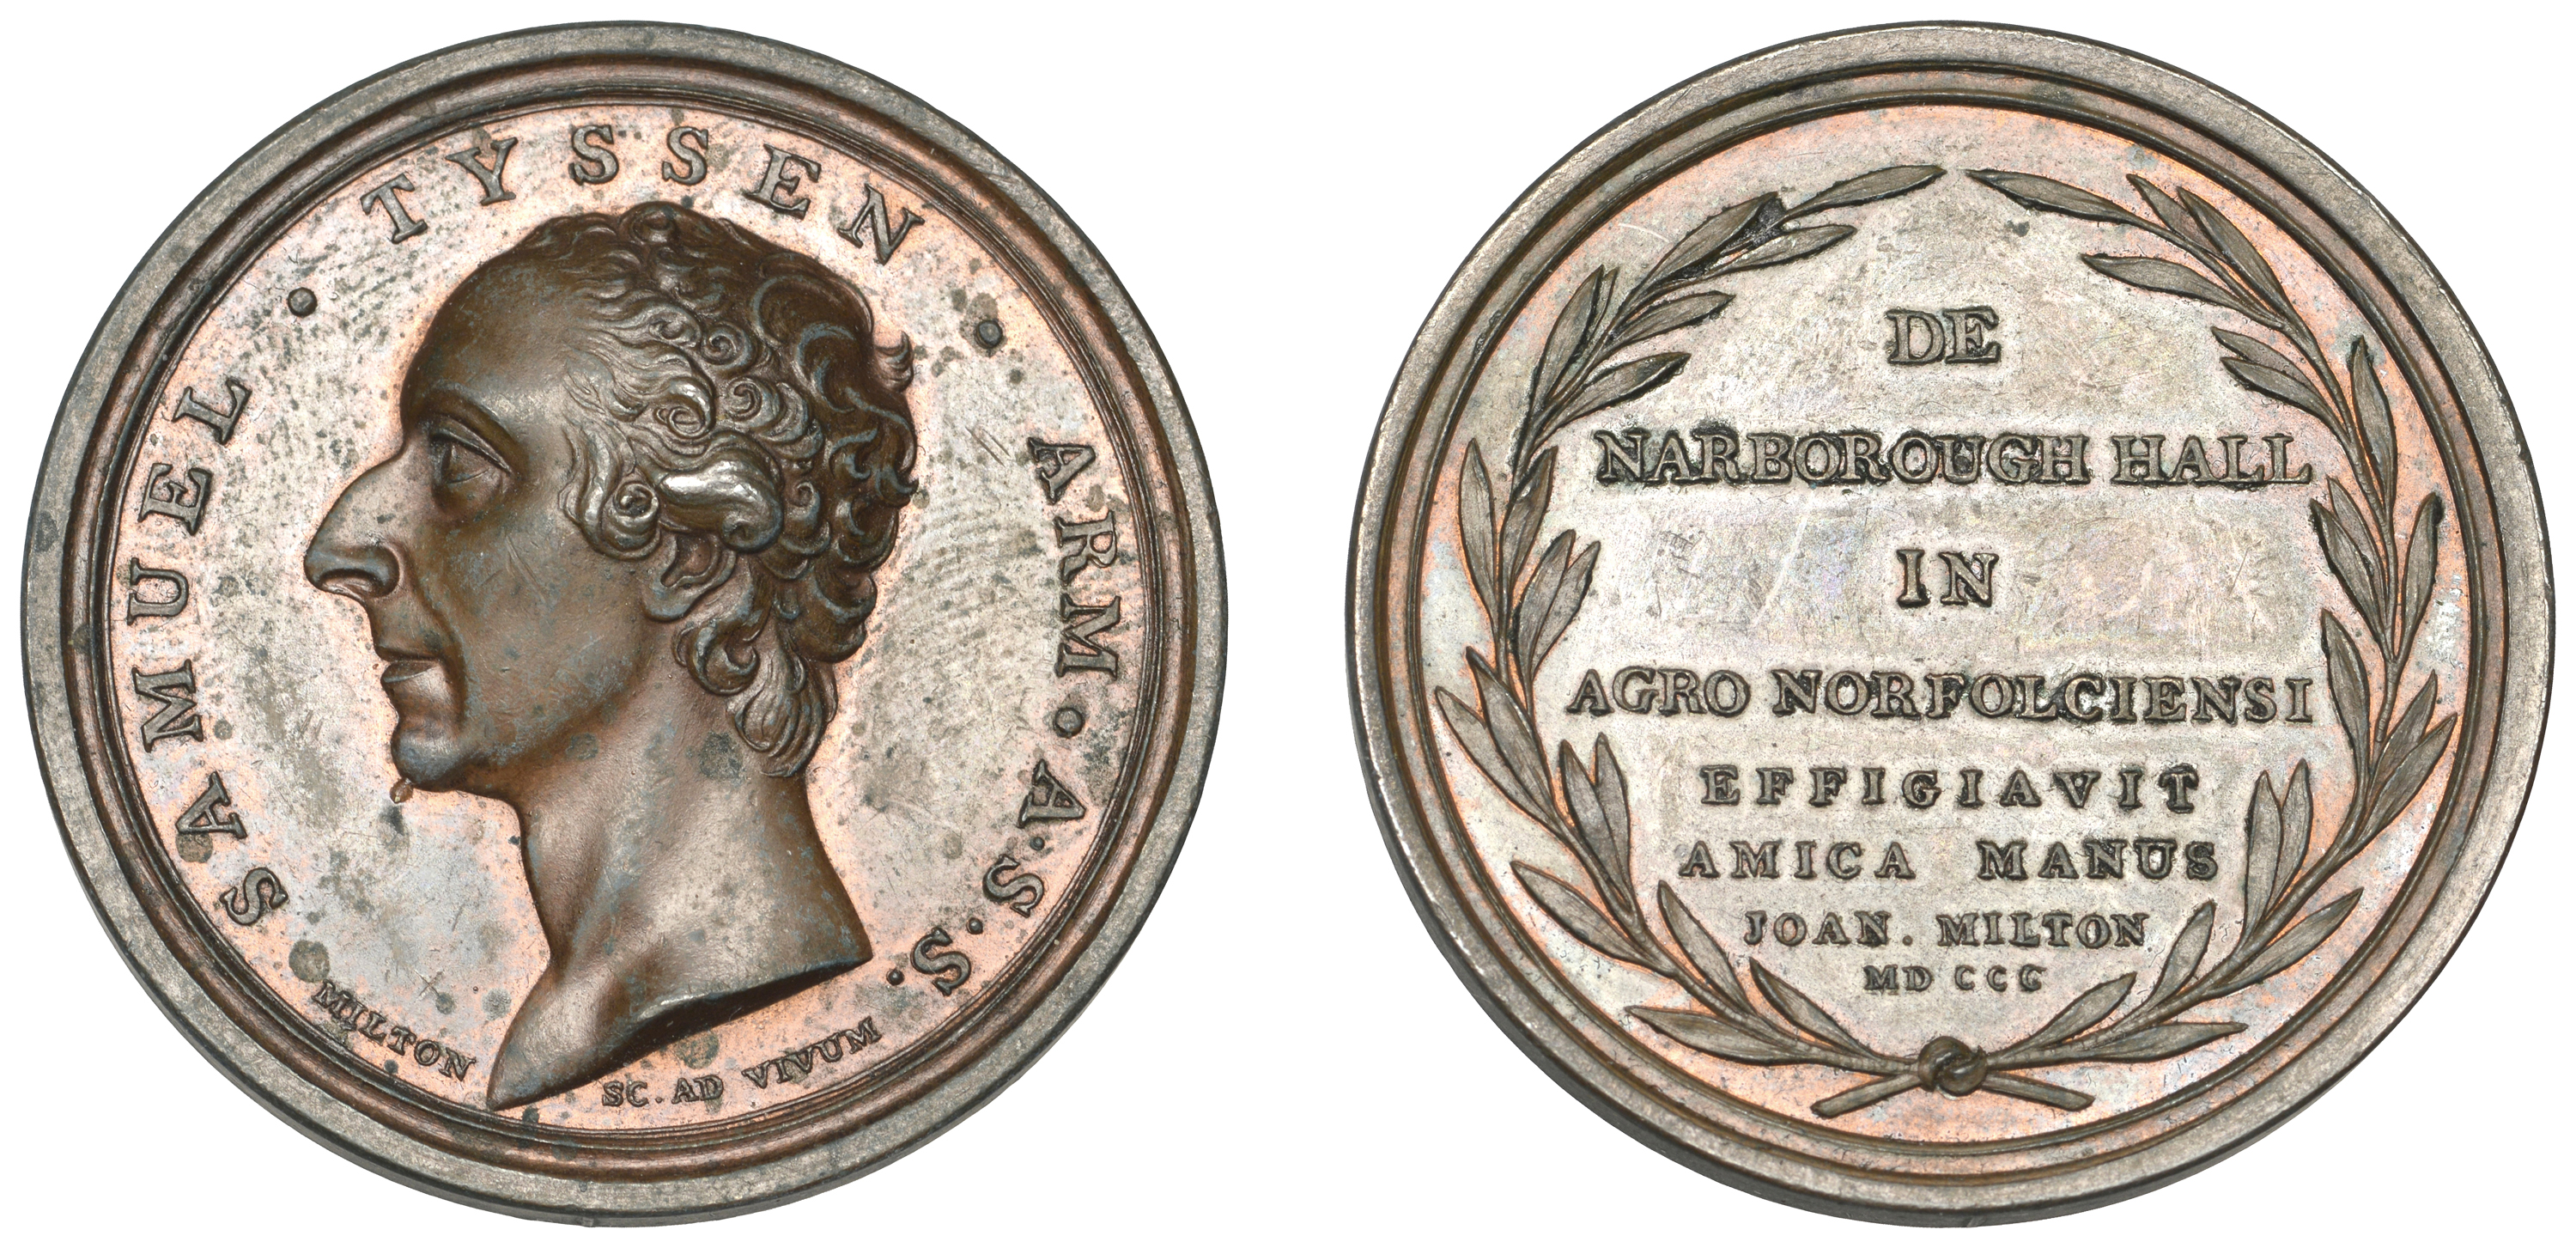 Death of Samuel Tyssen, 1800, a copper medal by J. Milton, bust left, samuel tyssen arm a s...